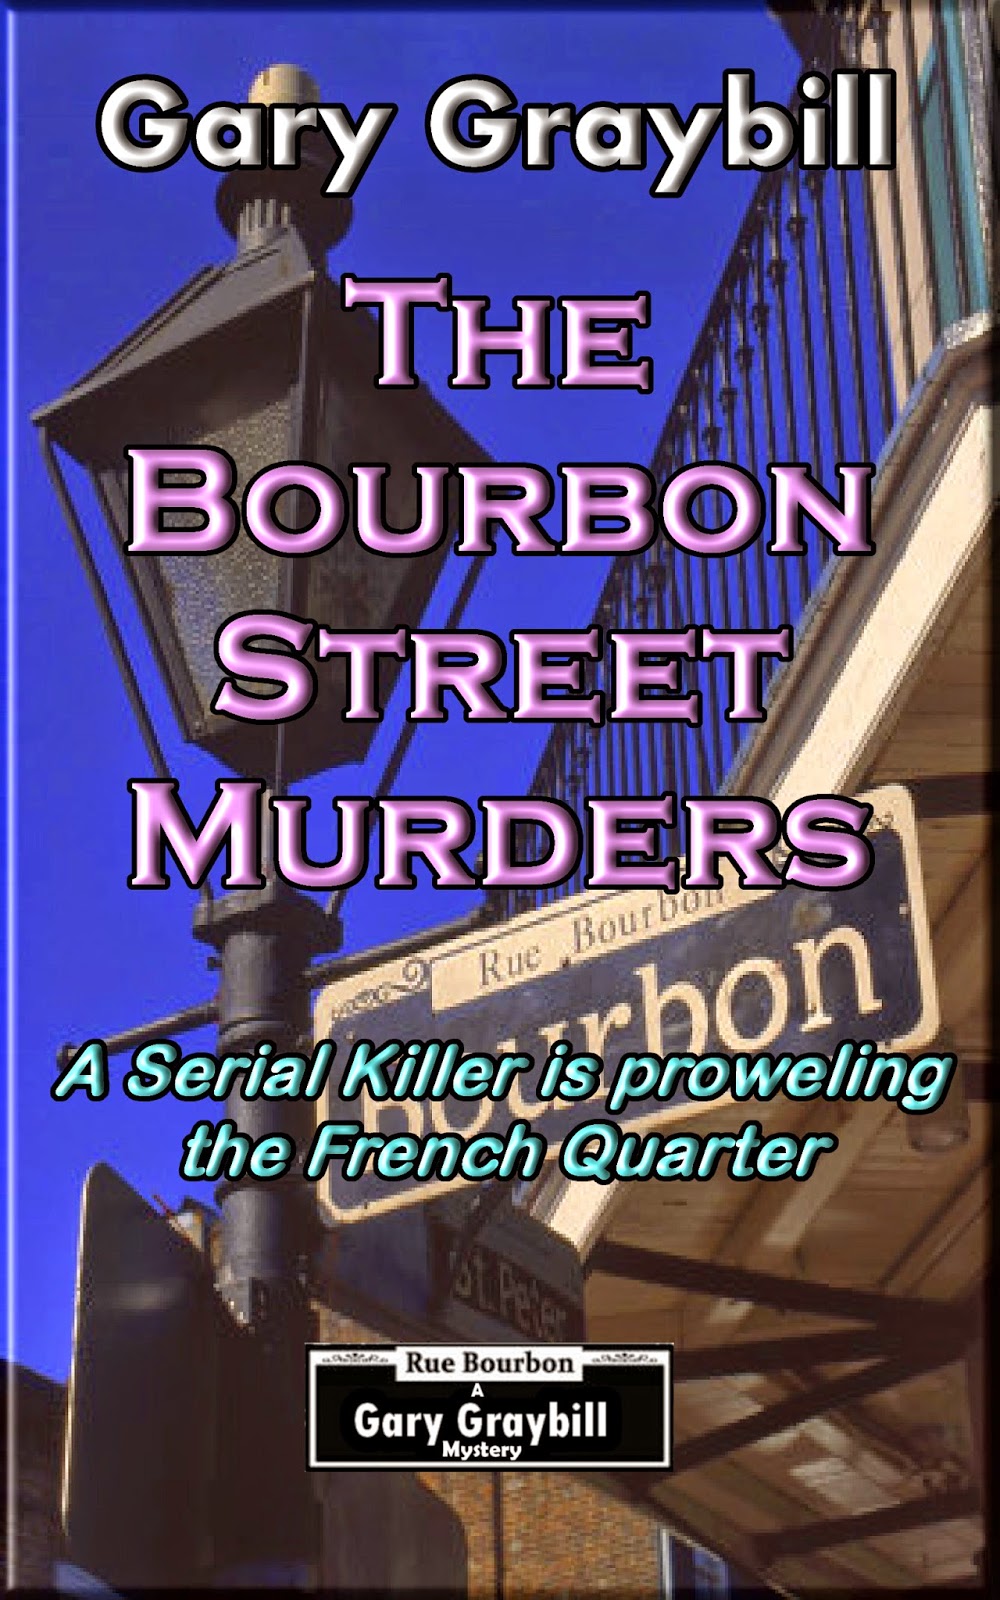 http://www.amazon.com/Bourbon-Street-Murders-proweling-Quarter/dp/1508865647/ref=sr_1_1?ie=UTF8&qid=1426394442&sr=8-1&keywords=Gary+Graybill